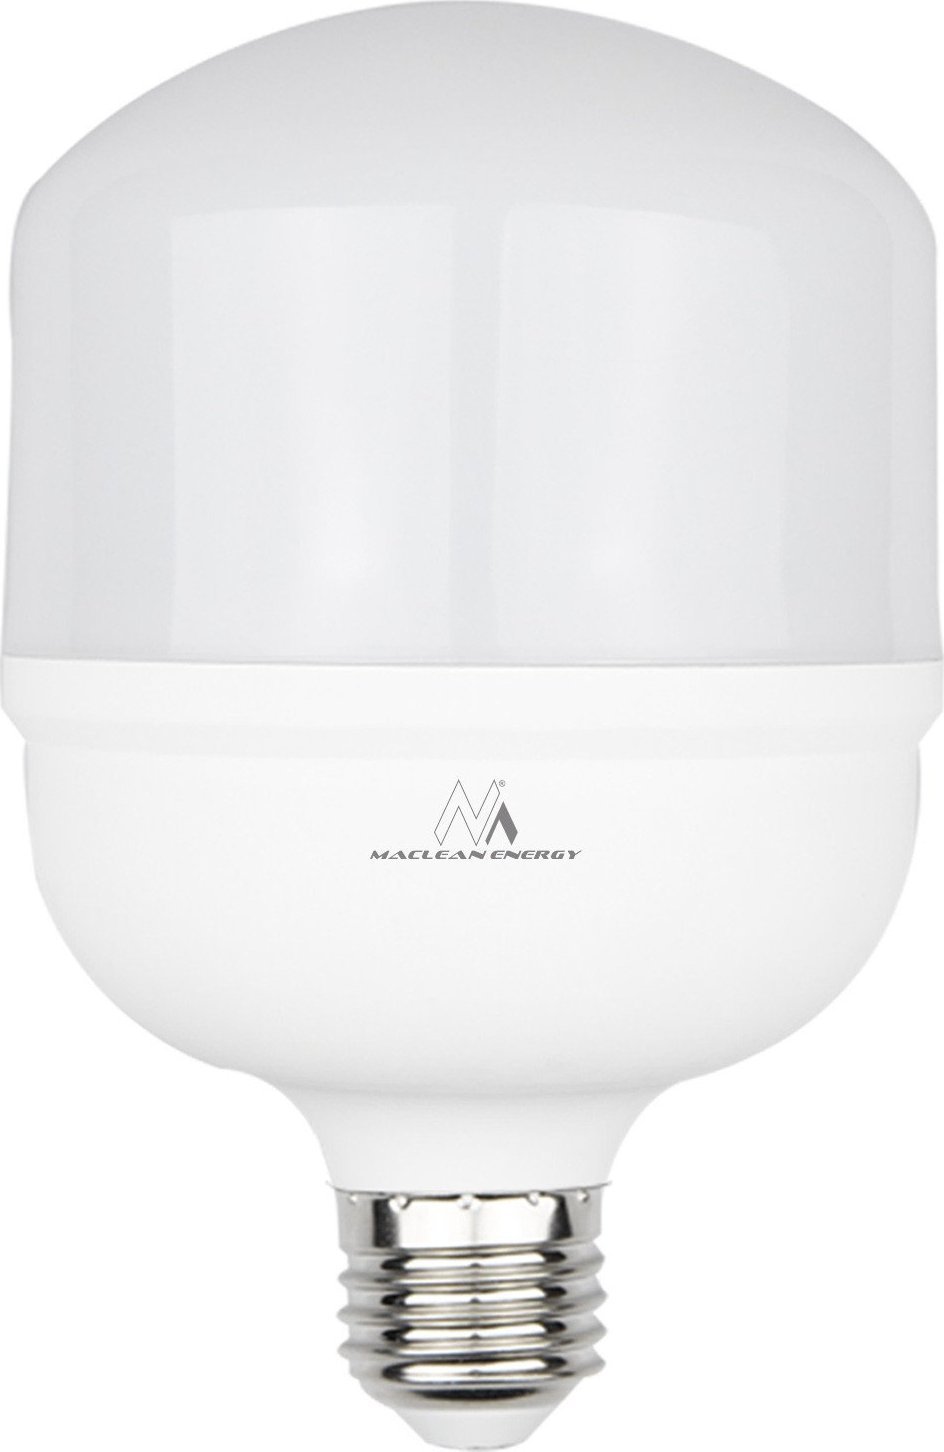 Bec LED Maclean Maclean MCE304 CW E27, 48W, 220-240V AC, alb rece, 6500K, 5040lm